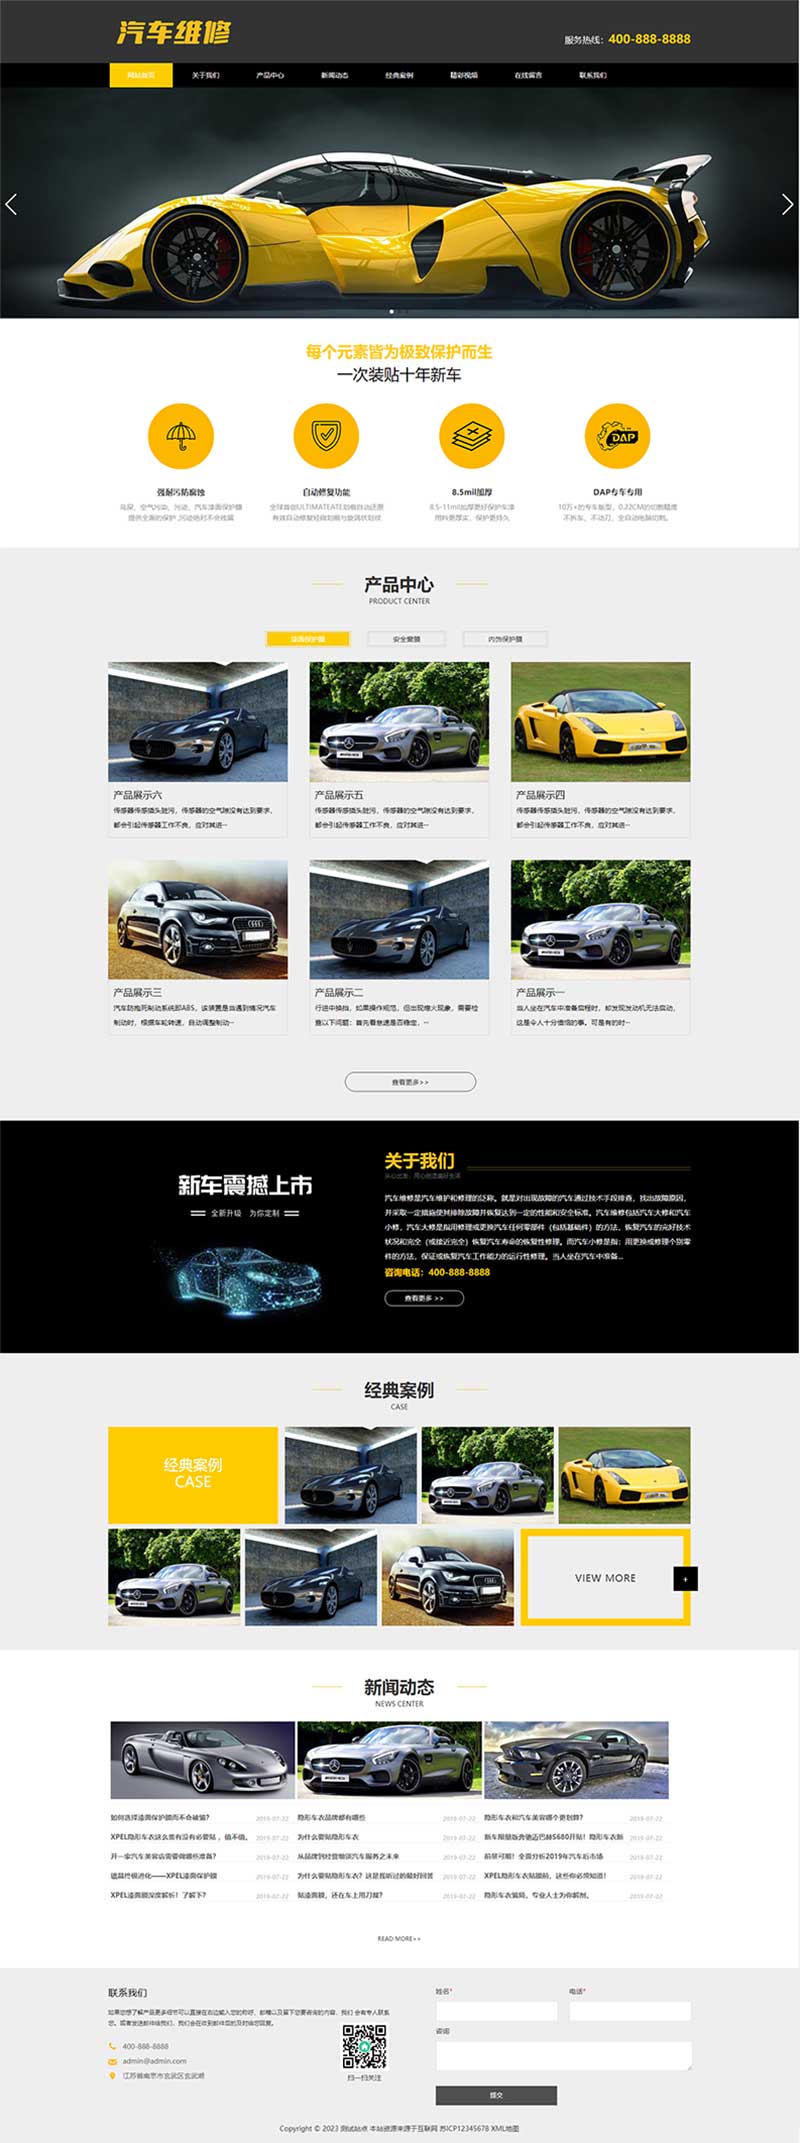 (PC+WAP)汽车美容维修贴膜工厂4S汽车维修店网站